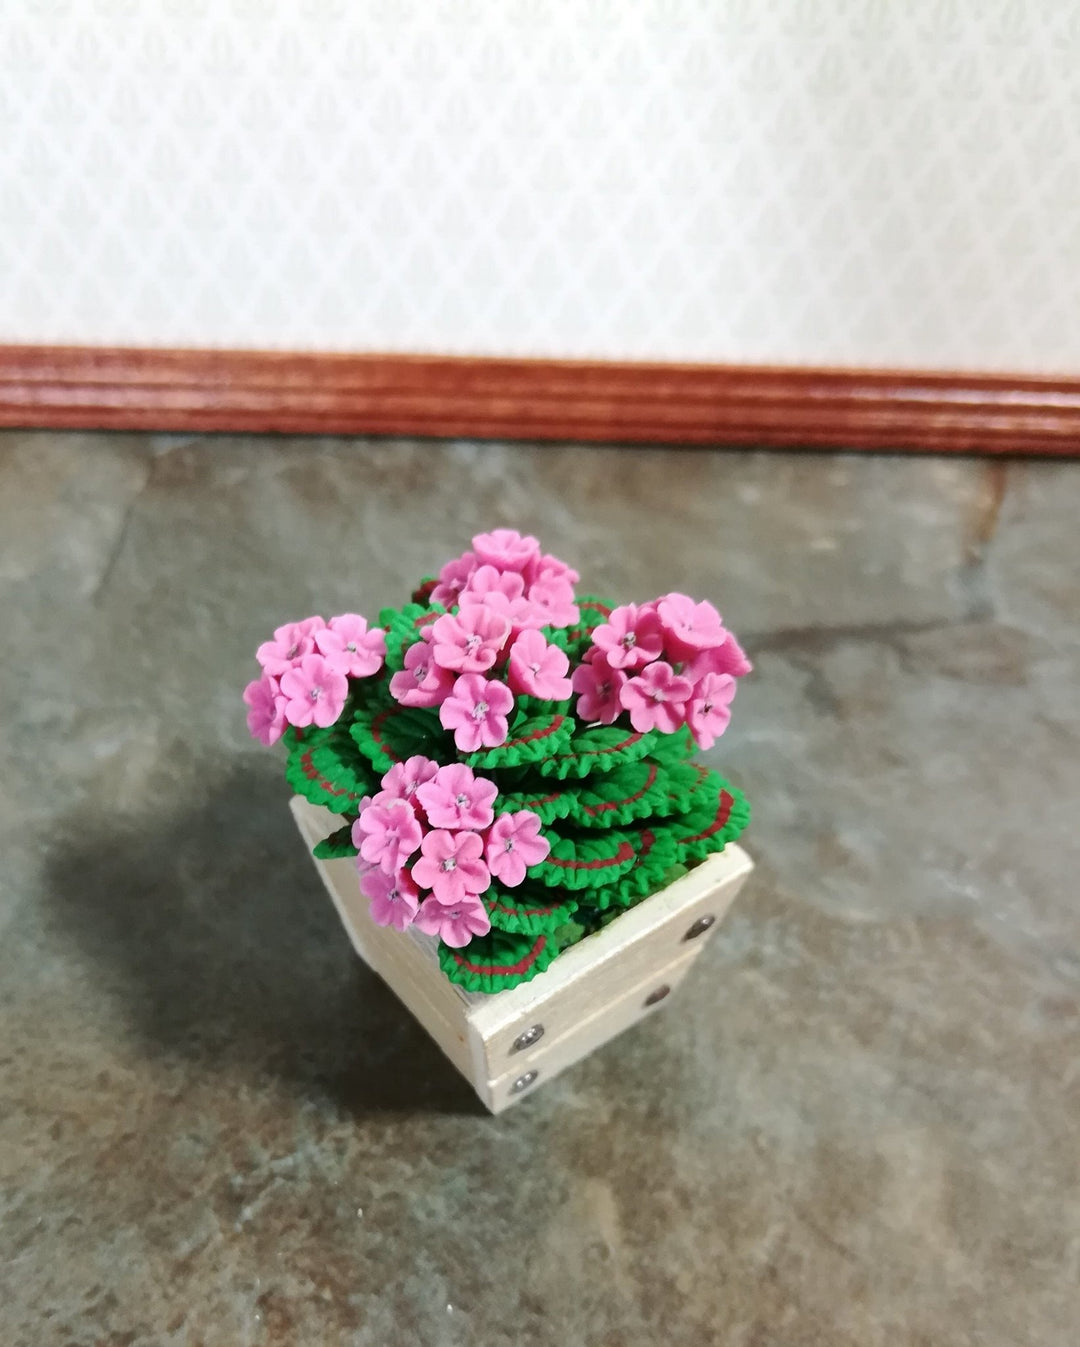 Dollhouse Miniature Pink Geraniums in Wood Flower Planter Box 1:12 Scale - Miniature Crush